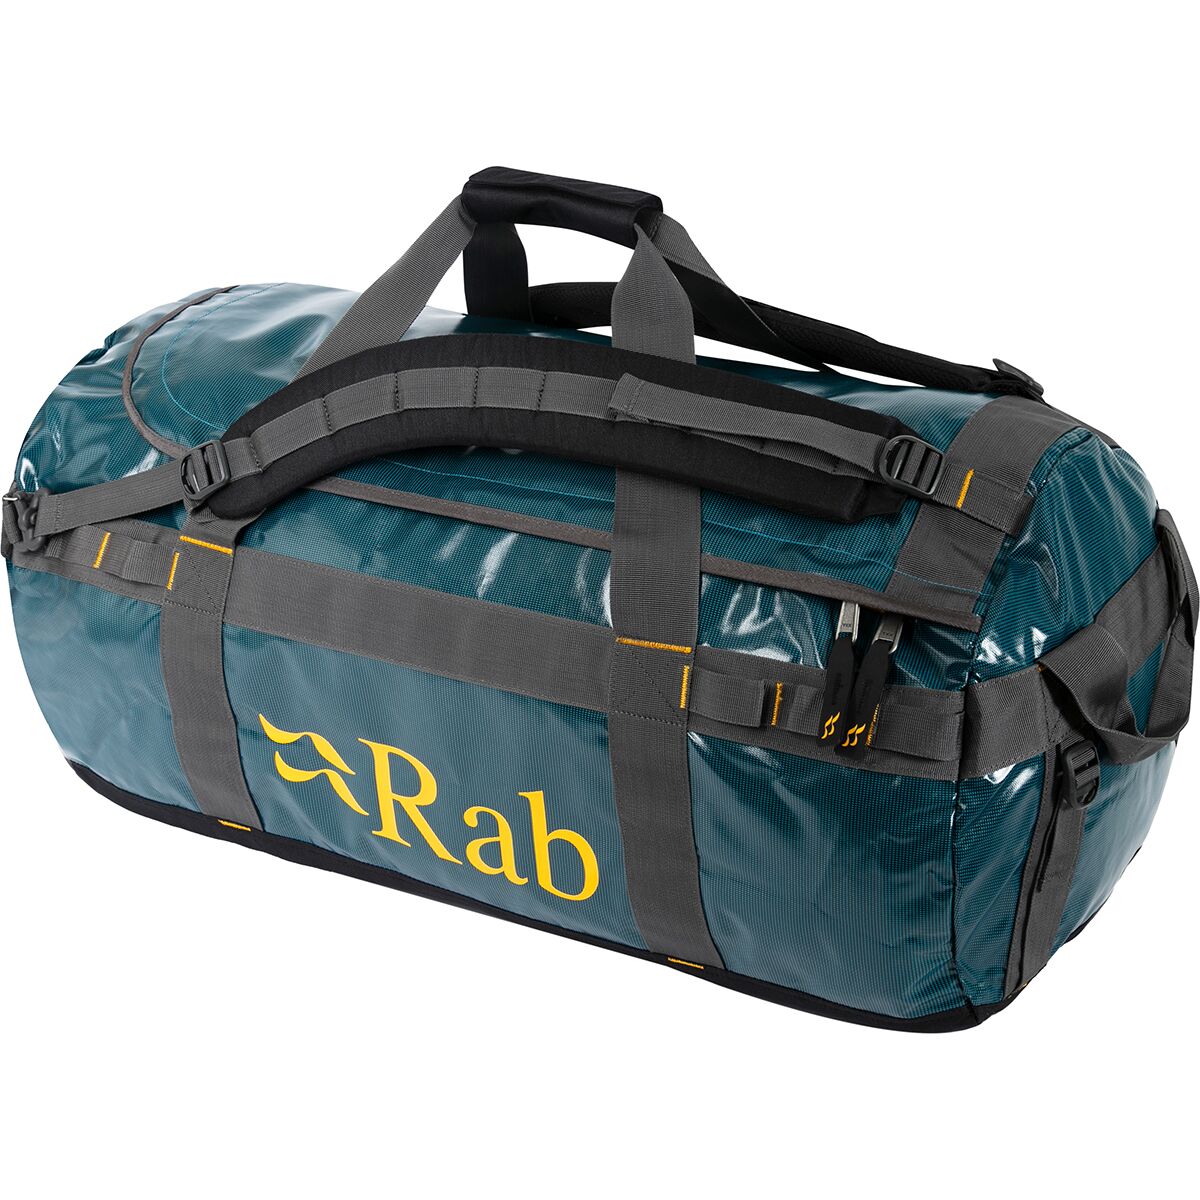 Rab Expedition Kitbag 80L Duffel